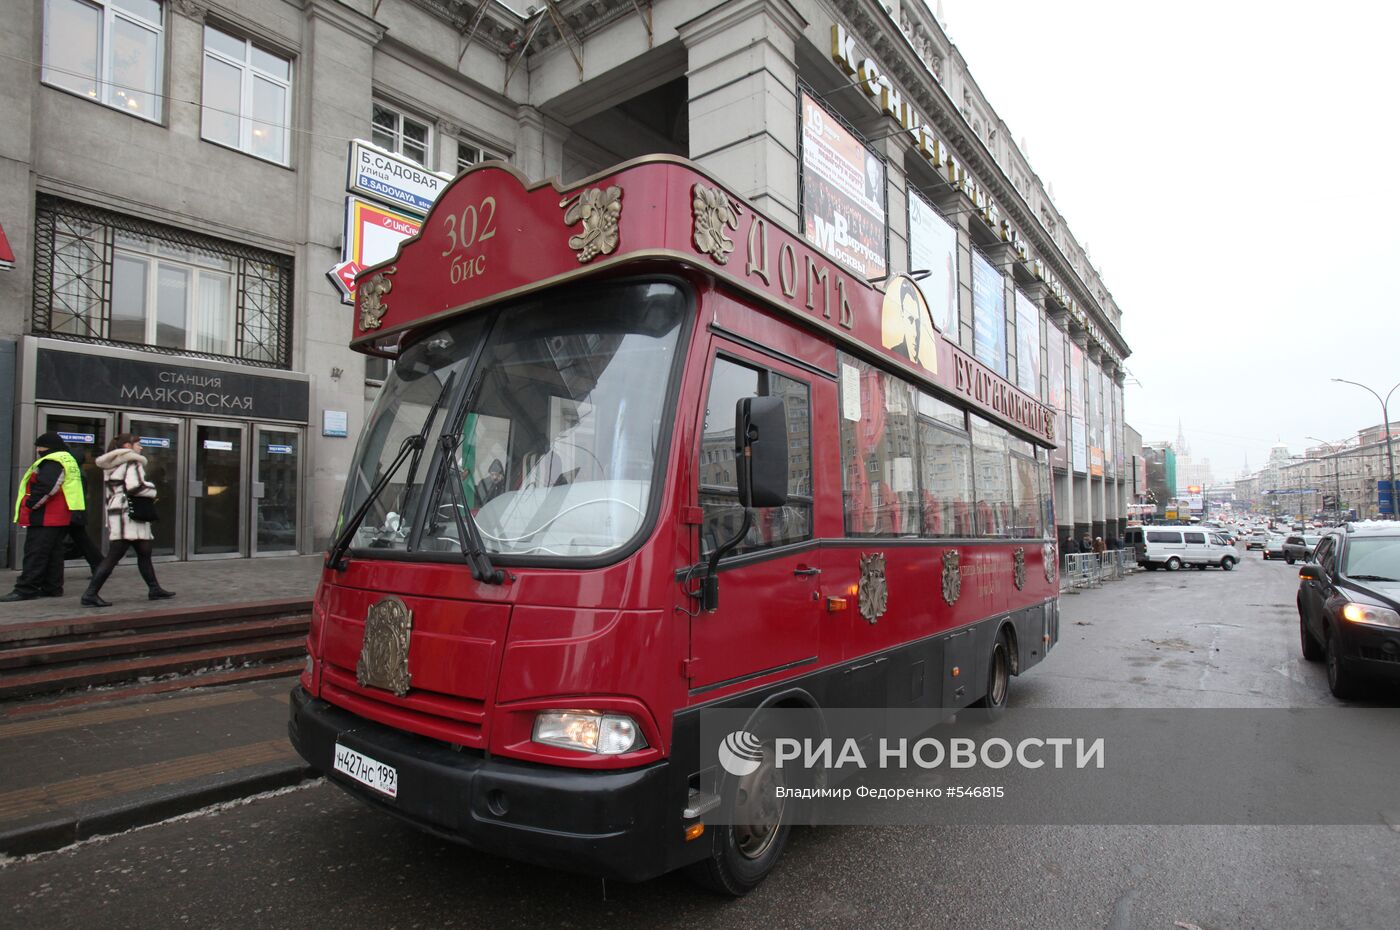 Булгаковский "Трамвай 302-бис"